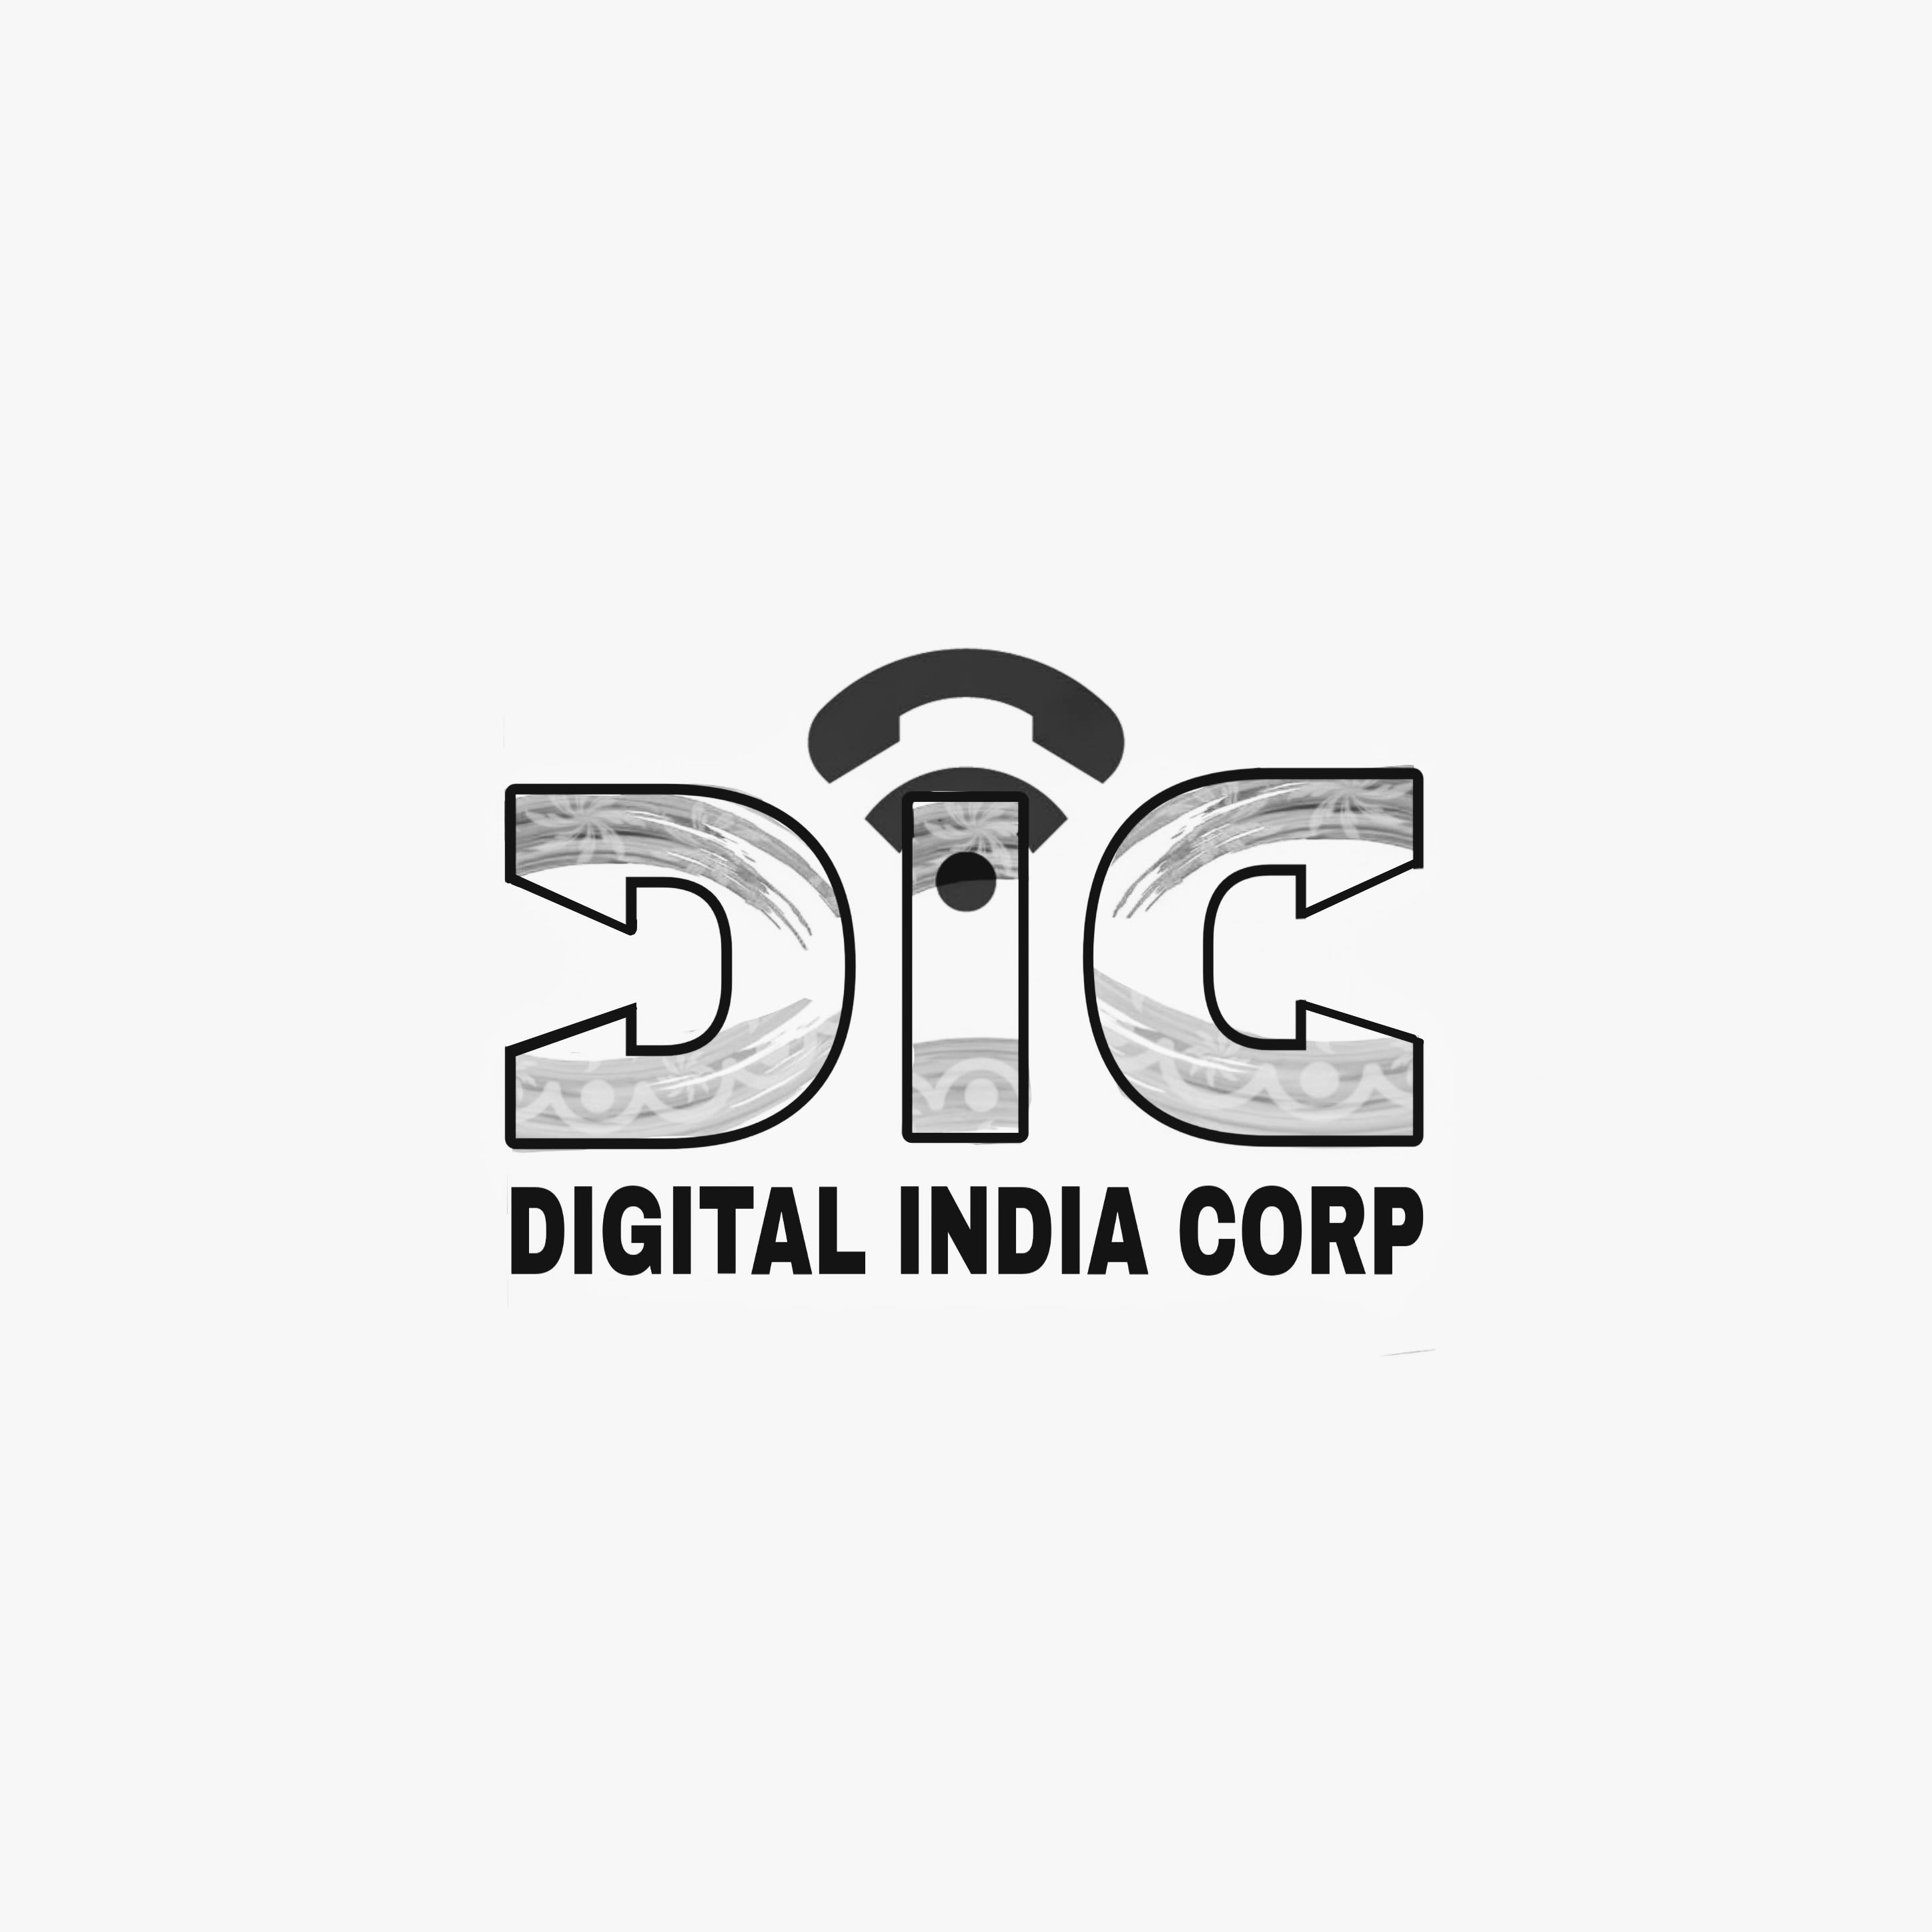 Digital India Corp